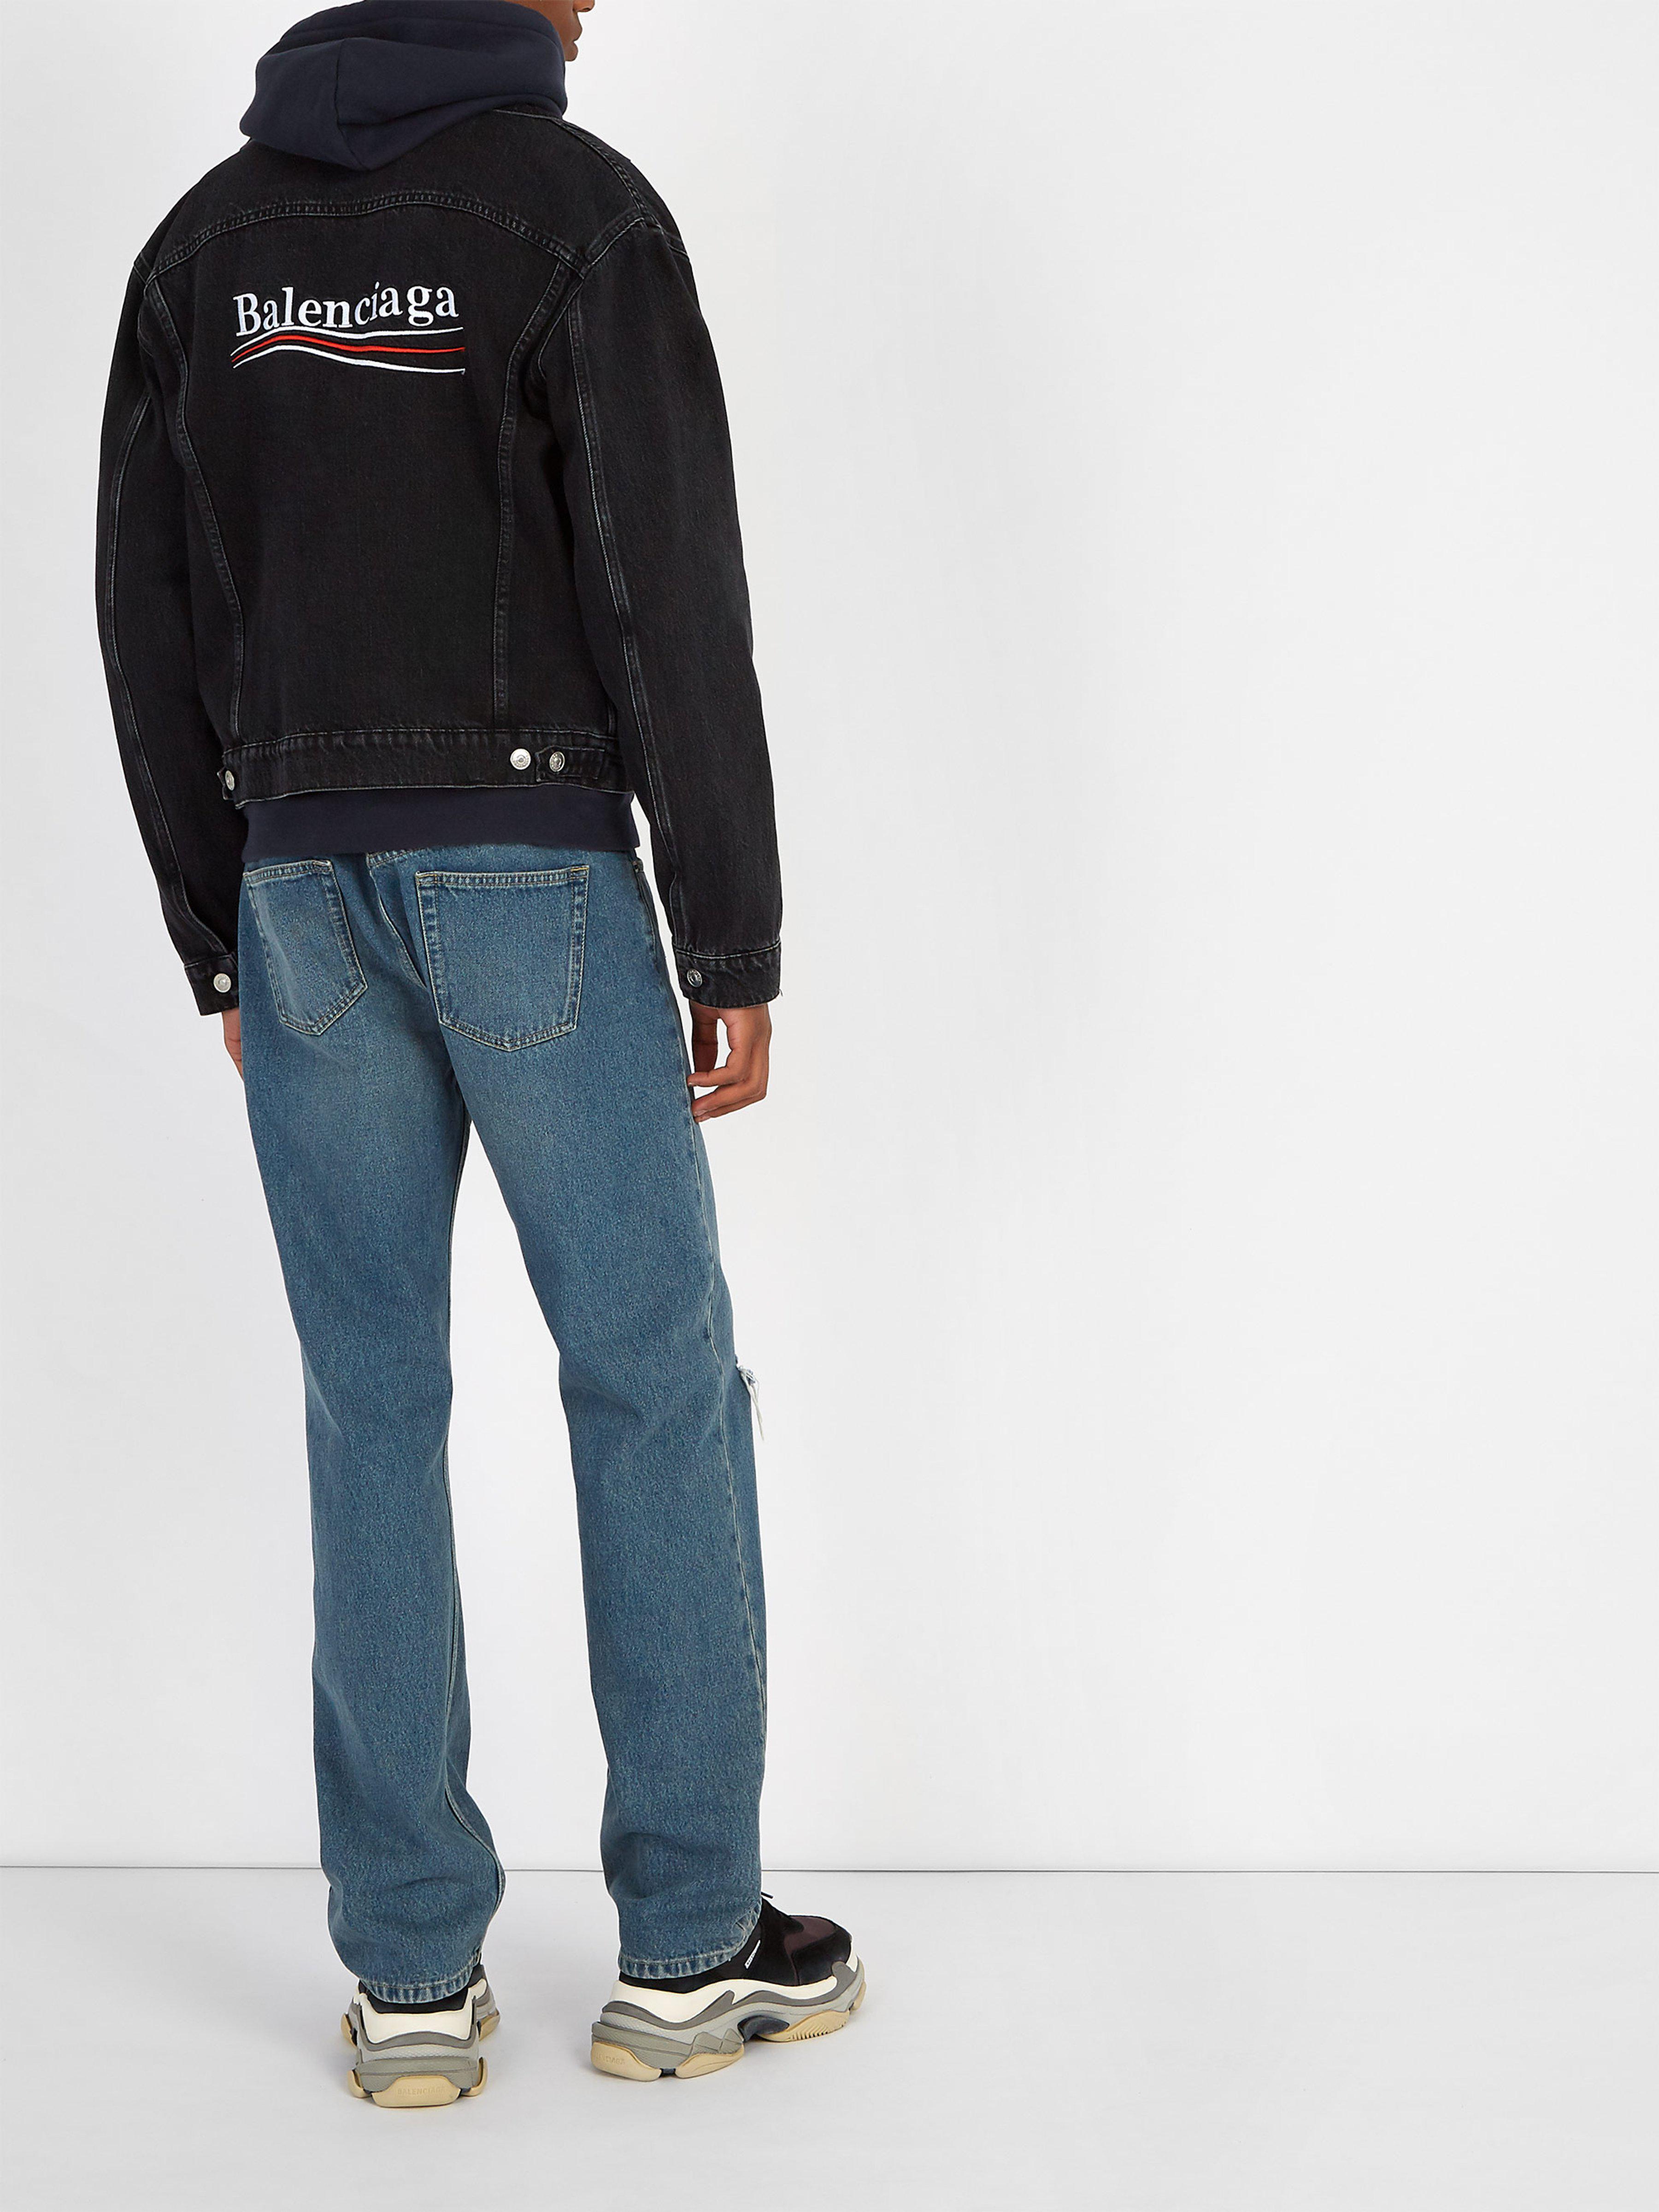 Balenciaga Distressed Denim Jacket in Black for Men | Lyst UK